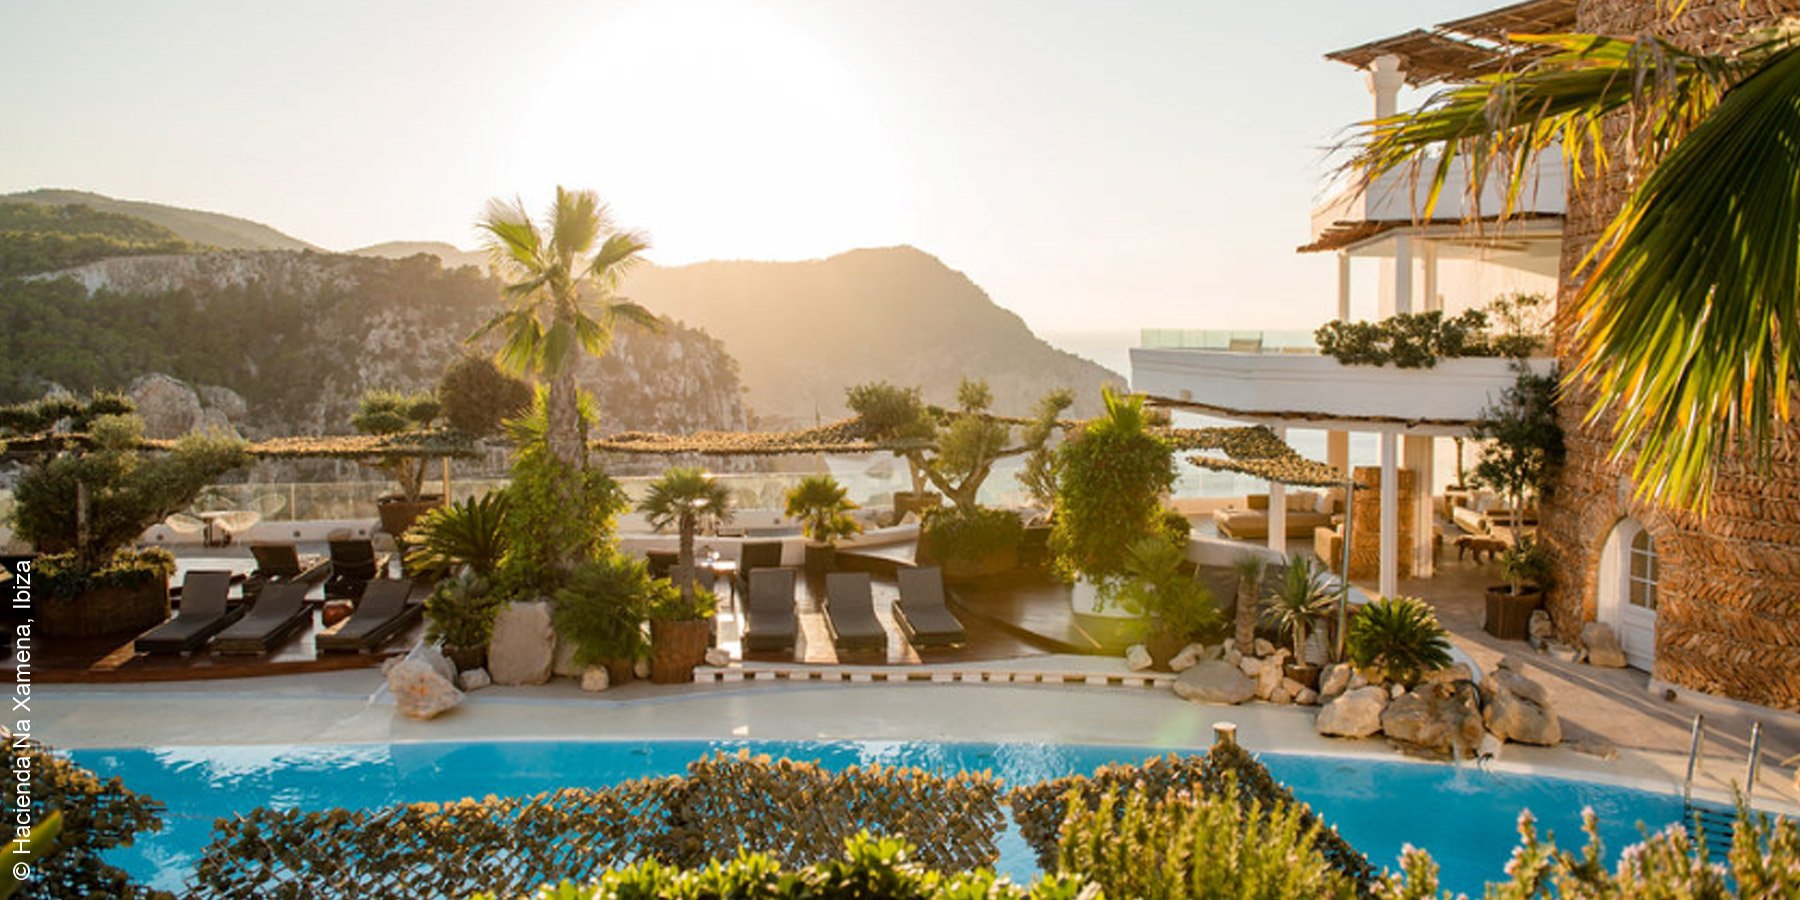 Hotel Hacienda Na Xamena | San Miguel, Ibiza | Pool | luxuszeit.com